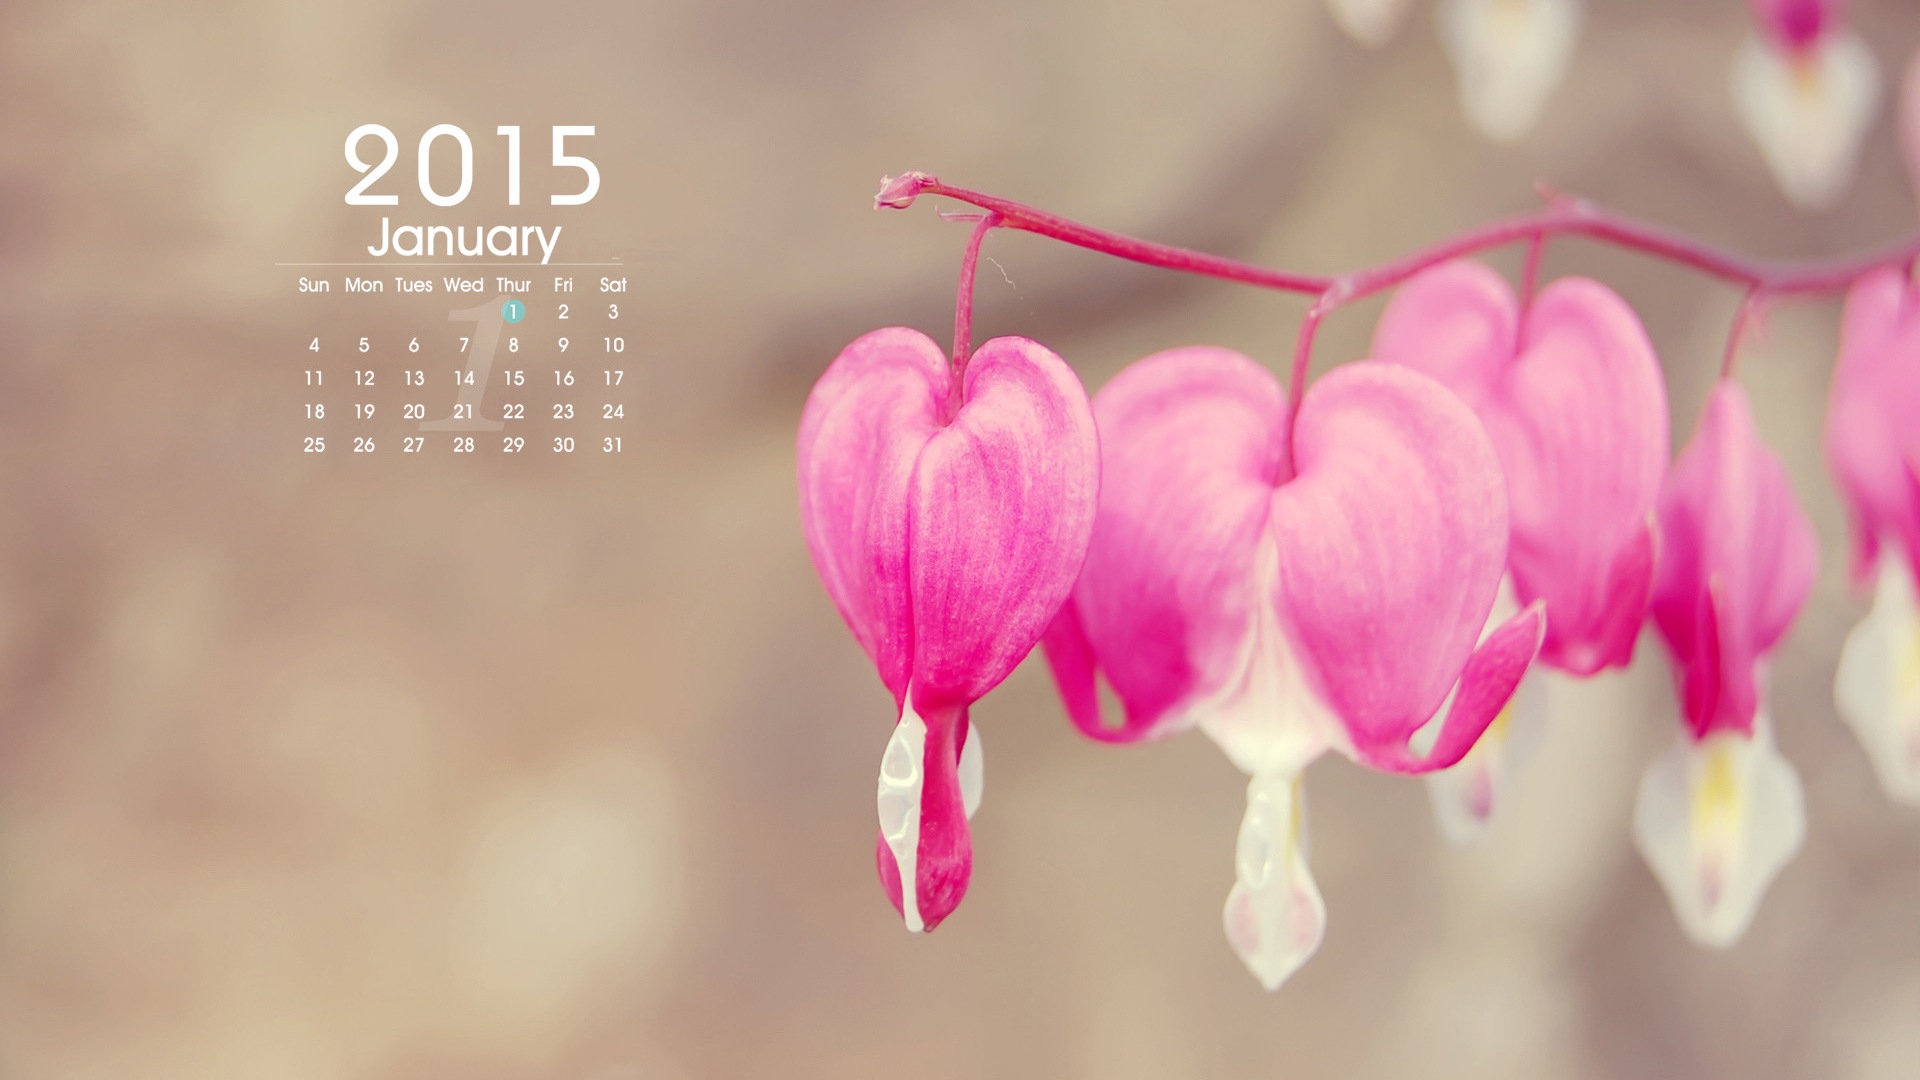 January 2015 calendar wallpaper (1) #9 - 1920x1080